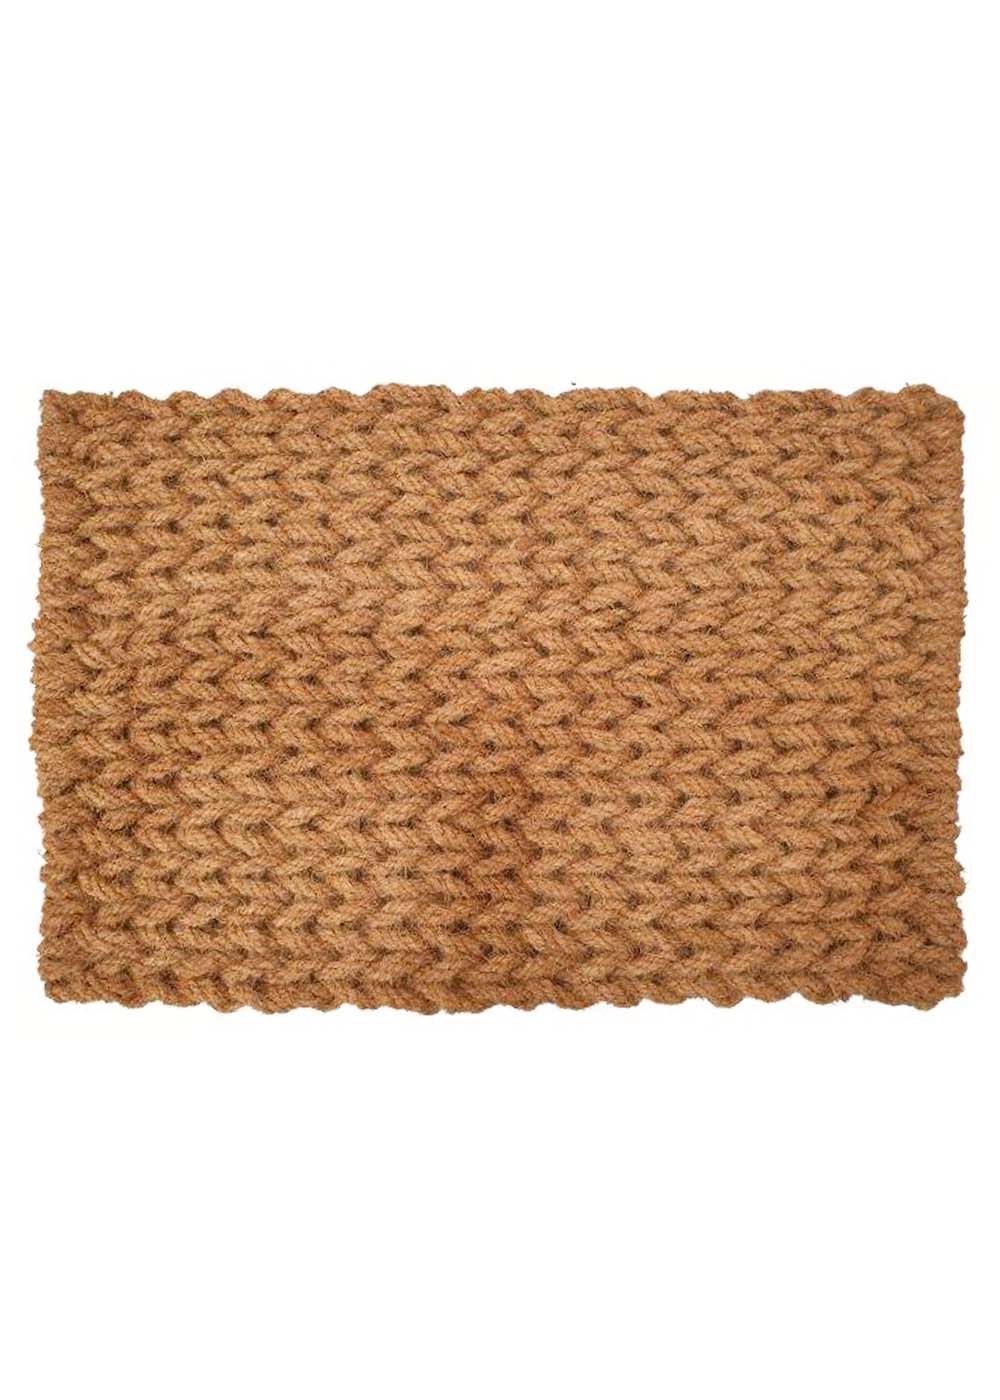 Coir Rope Woven Doormat - Knit Weave